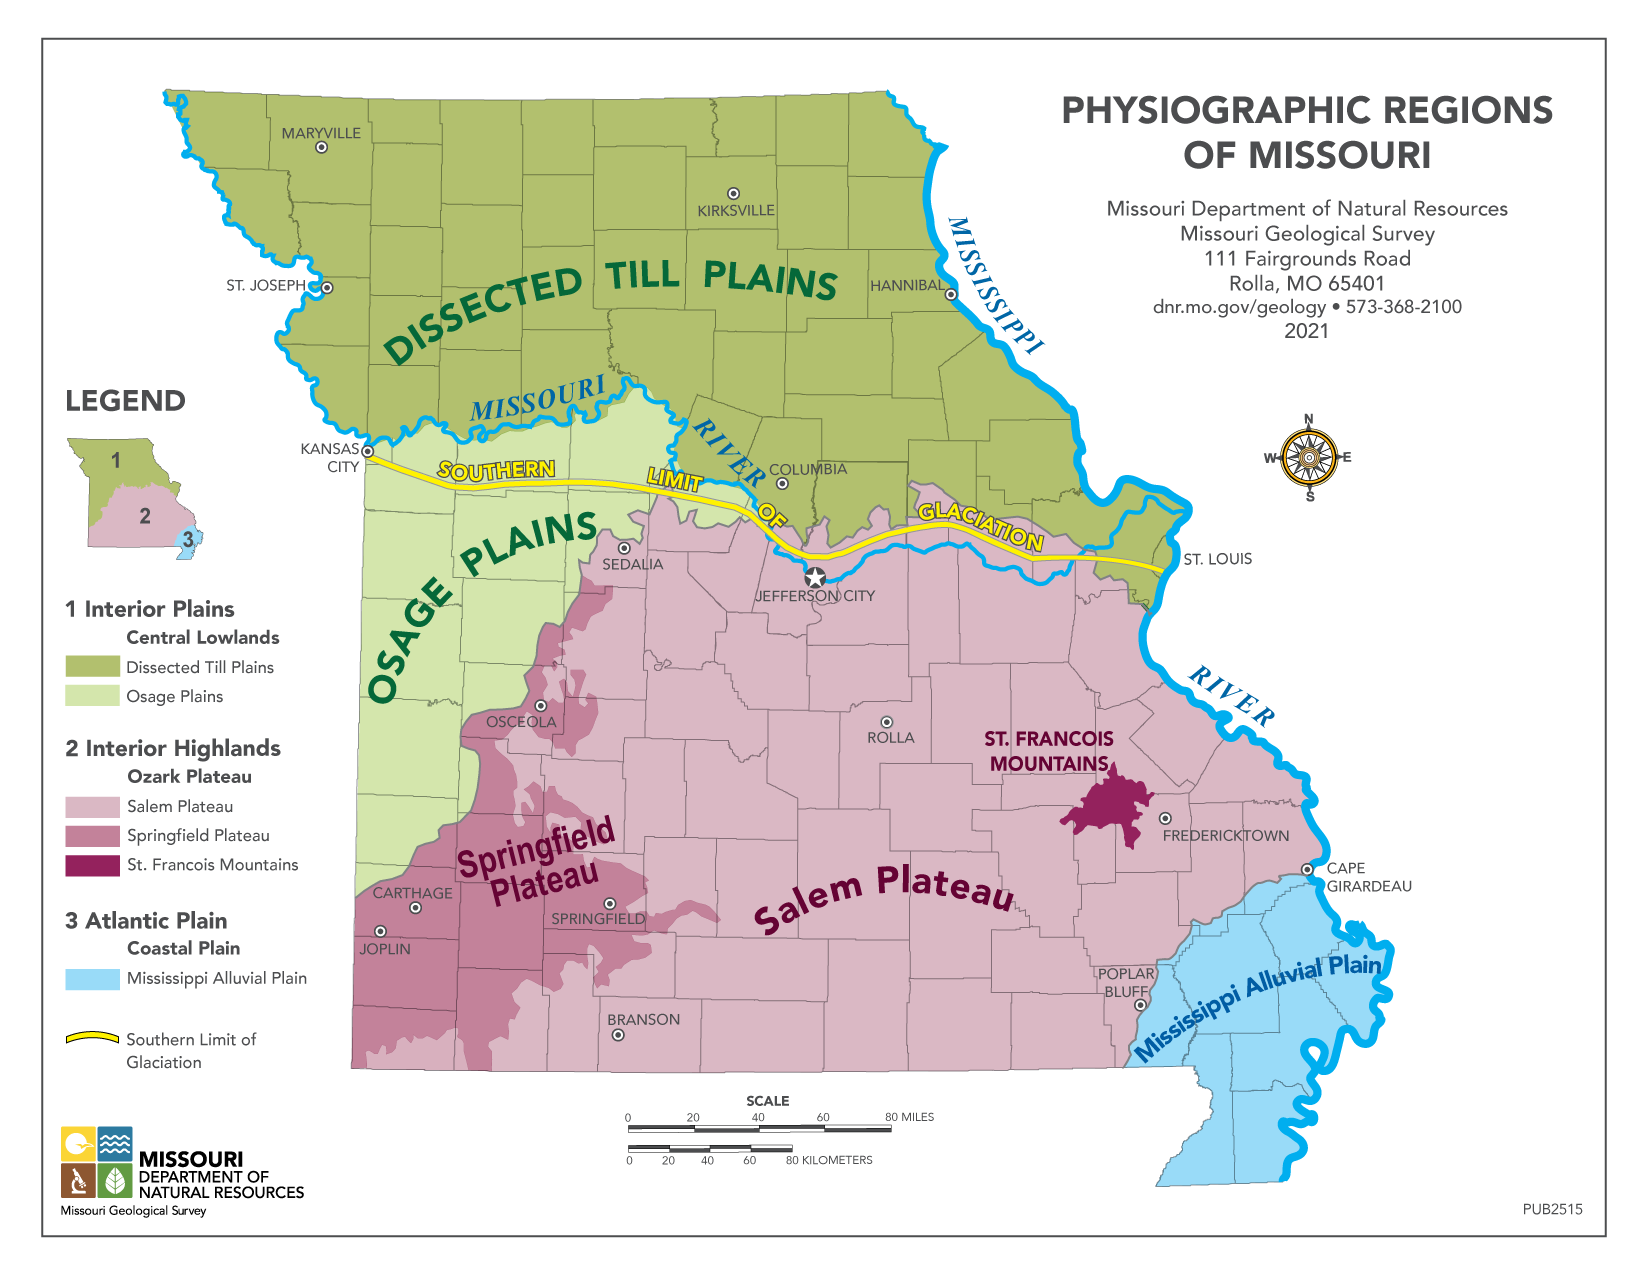 Physiographic Regions Map of Missouri - PUB2515